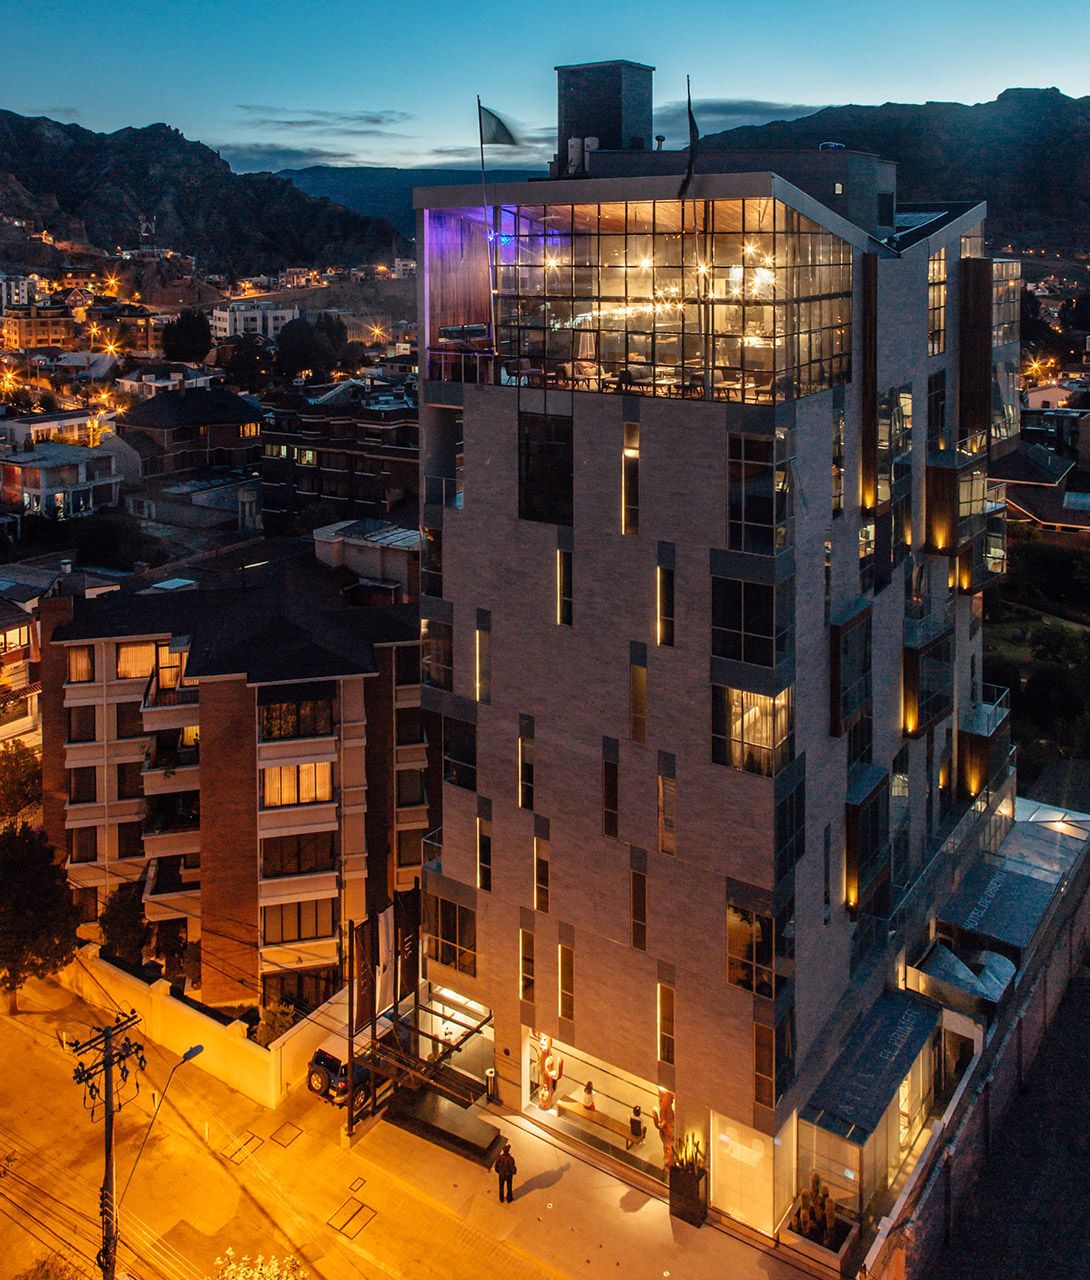 Atix Hotel Architecture n La Paz